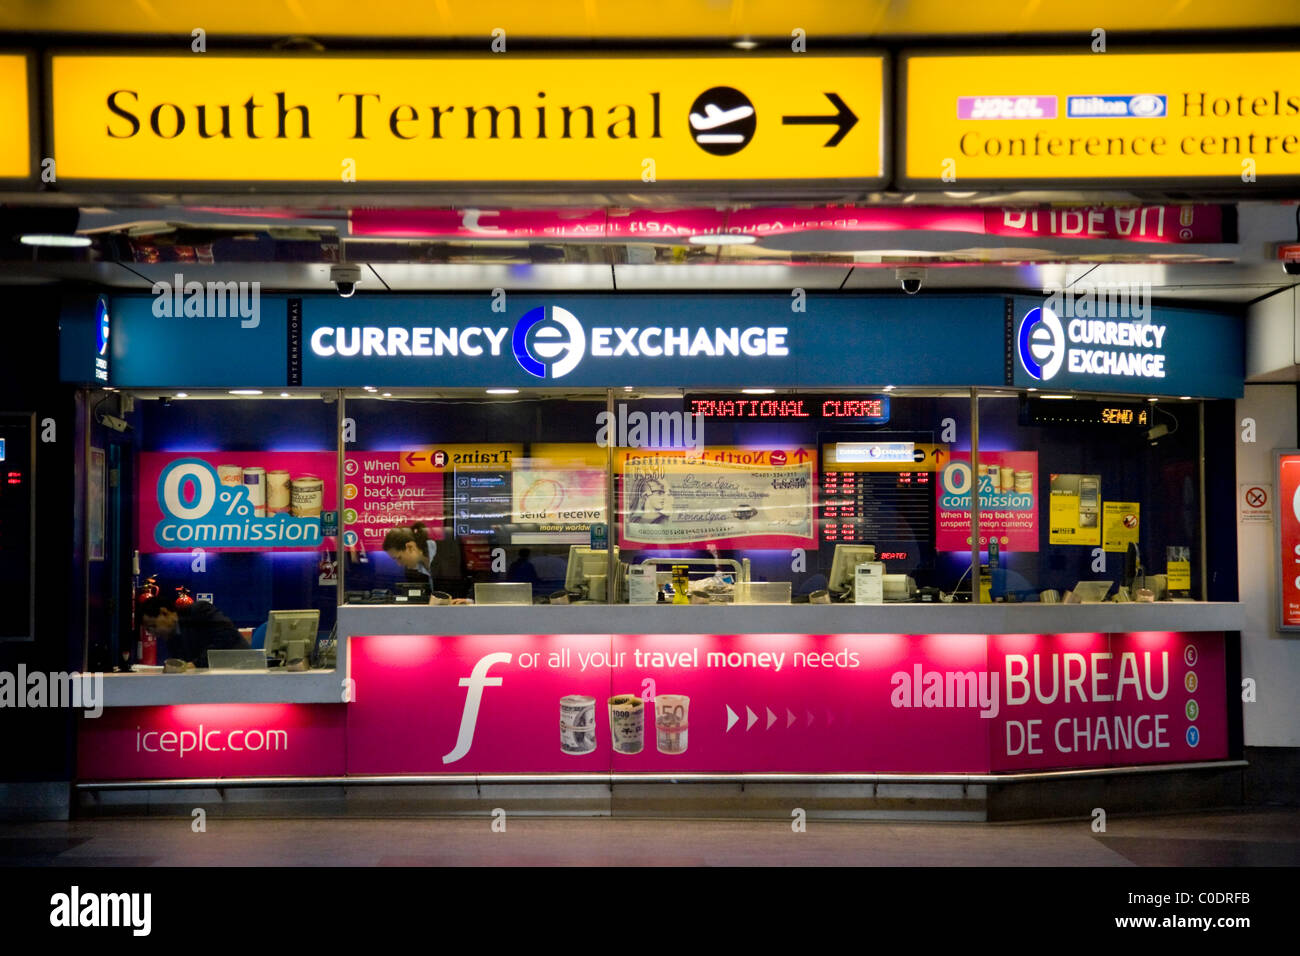 Bureau de Change operated by International Currency Exchange – 'ICE' Plc  bureau at South Terminal, Gatwick airport. London. UK Stock Photo - Alamy